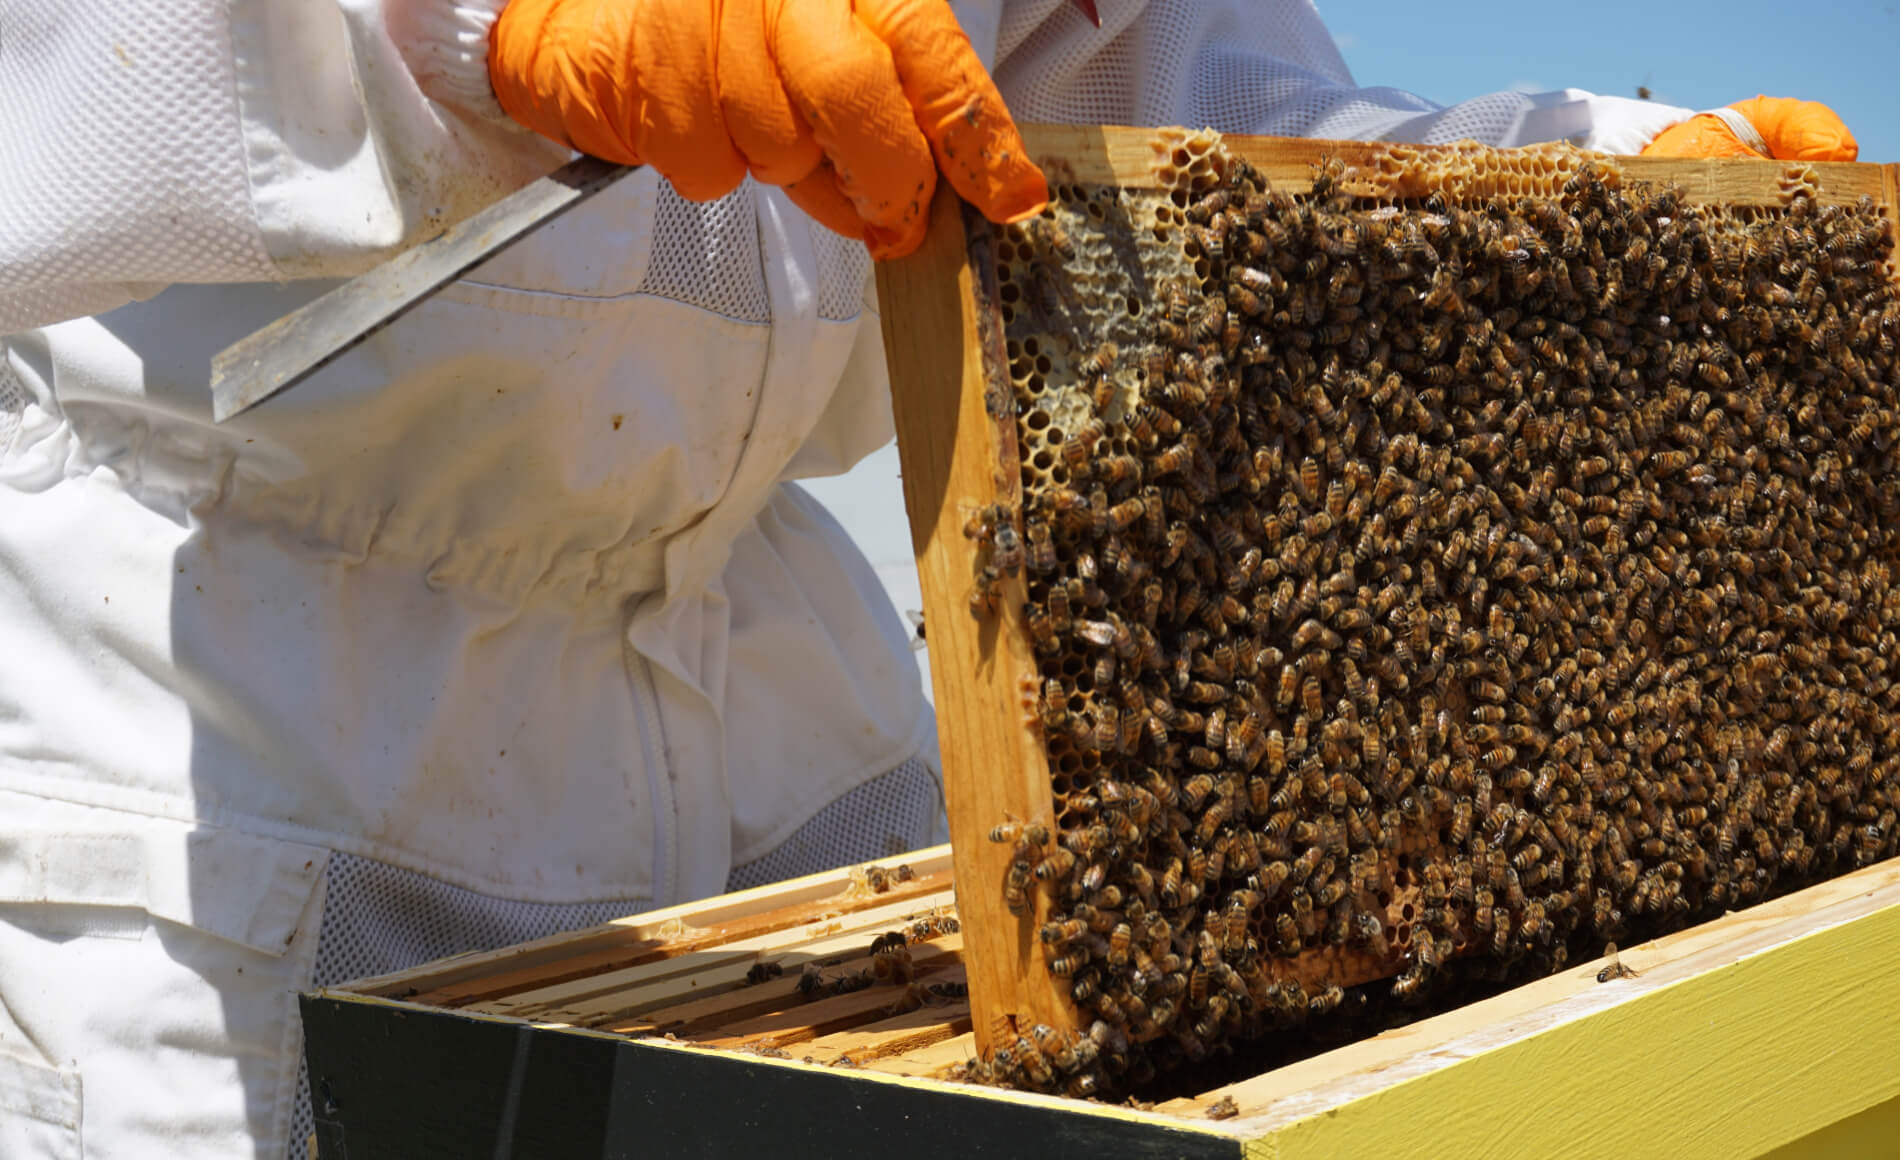 Bee Farming